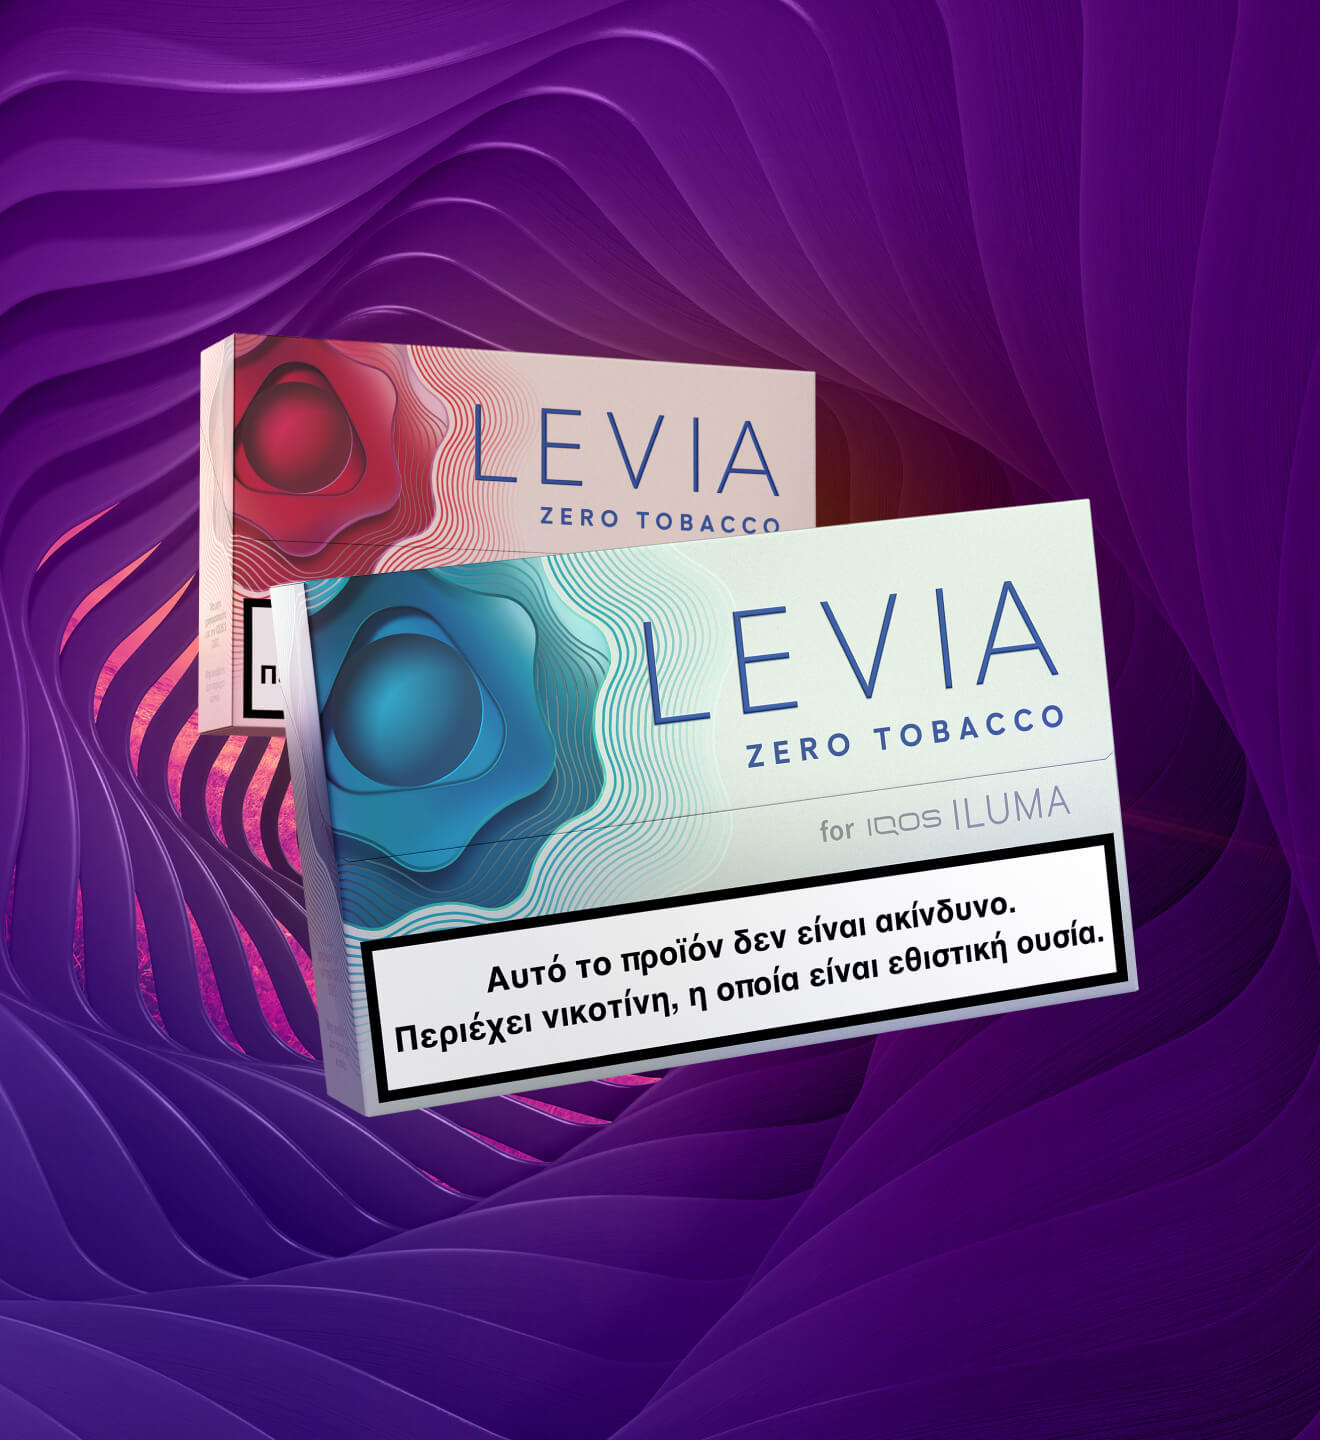 LEVIA for IQOS ILUMA - 2 packs of zero-tobacco sticks on a wavy violet background.